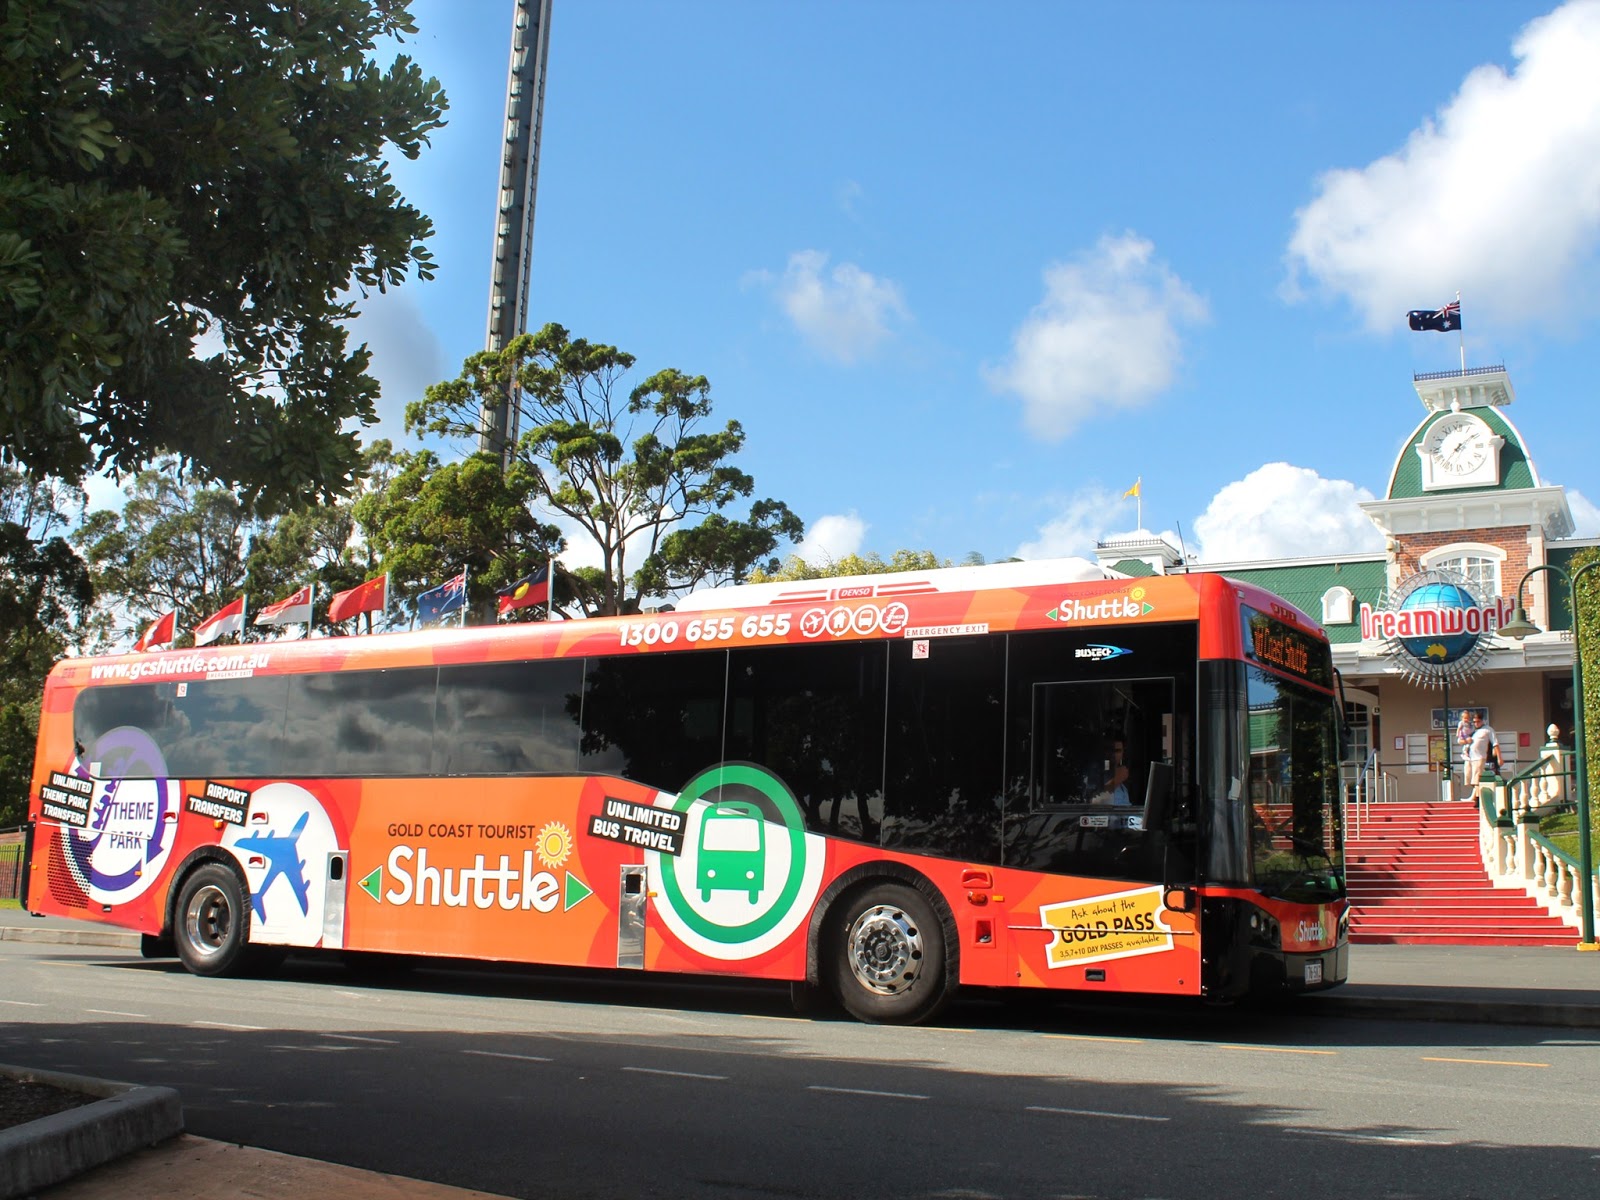 Apabila Kita tidak ingin ribet atau repot dengan rute yang ditawrkan Bus Maka sebagai wisatawan kita juga bisa looh menggunakan Gold Coast Tourist Shuttle